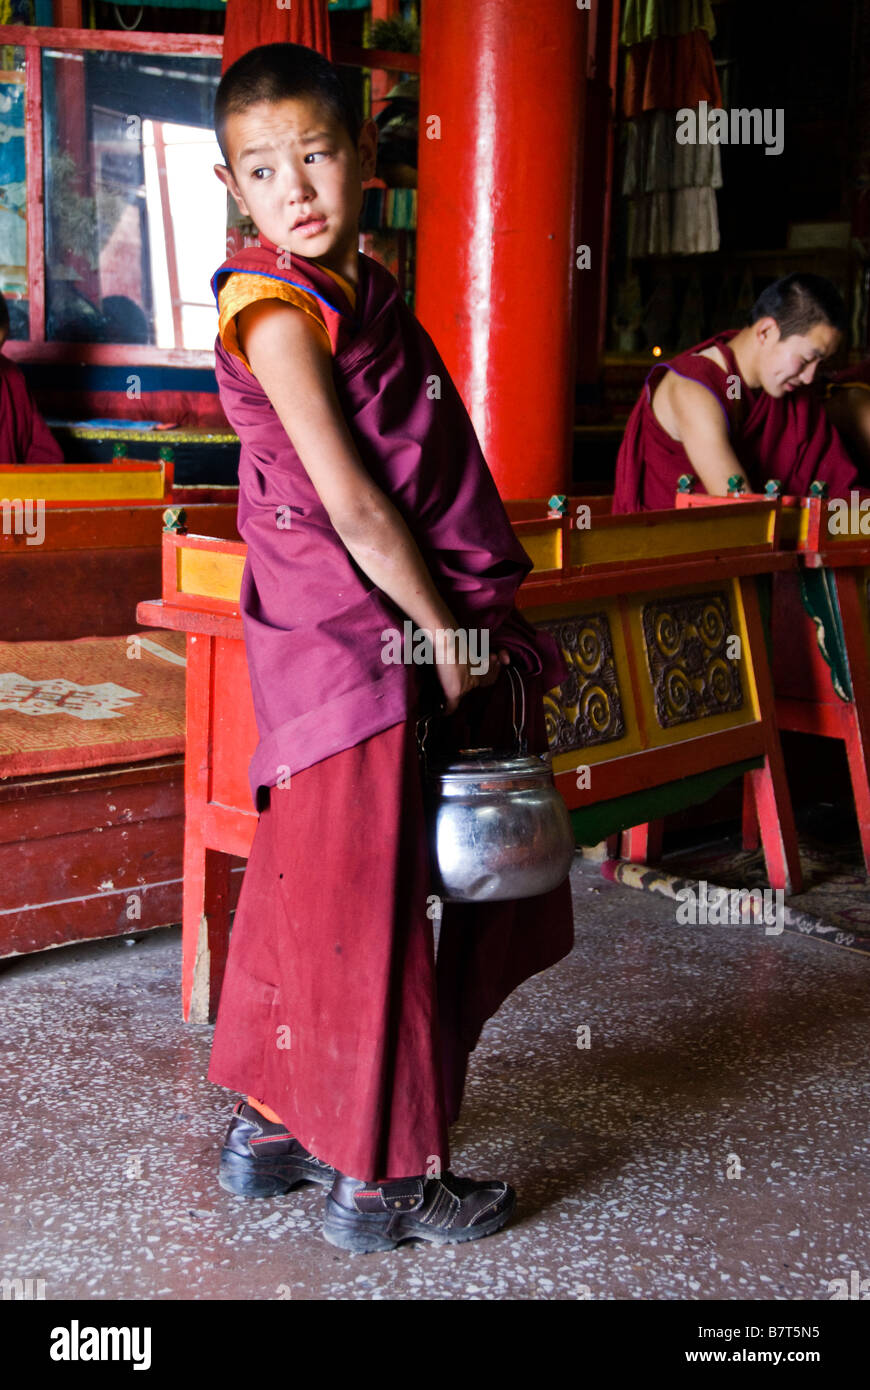 Buddhist student at the Gandantegchinlen Khiid monastery, Ulaan Bataar, Mongolia Stock Photo